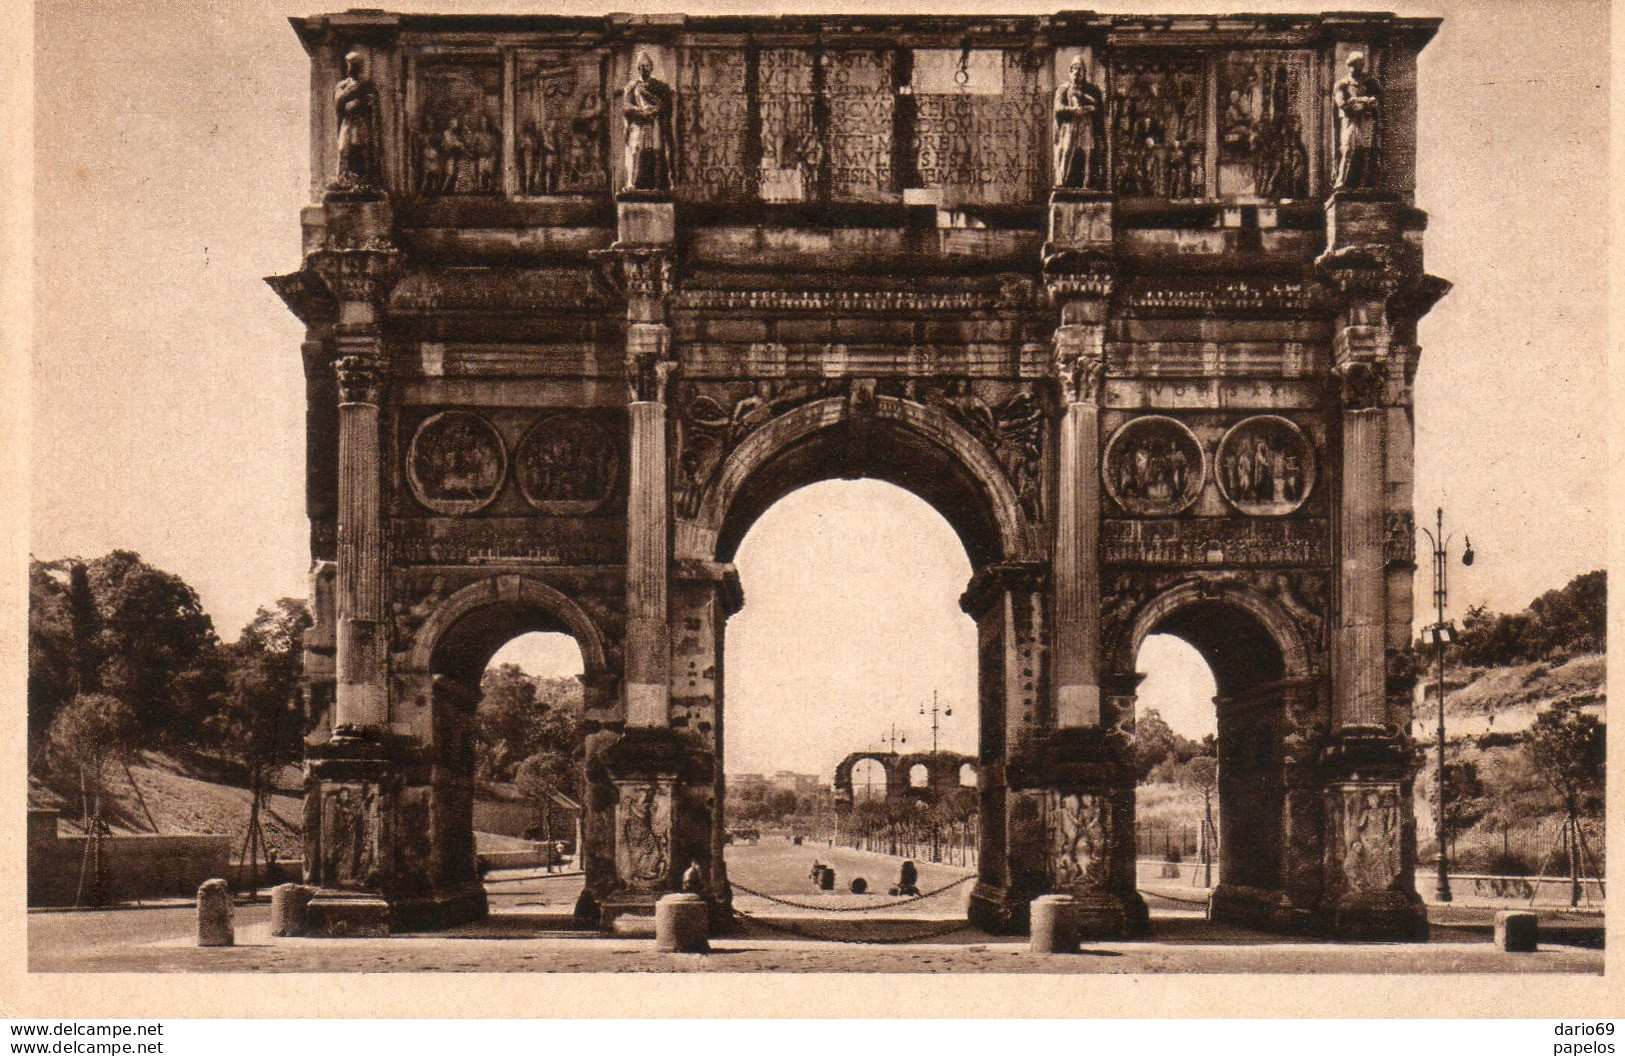 1937 CARTOLINA CON ANNULLO ROMA - Autres Monuments, édifices